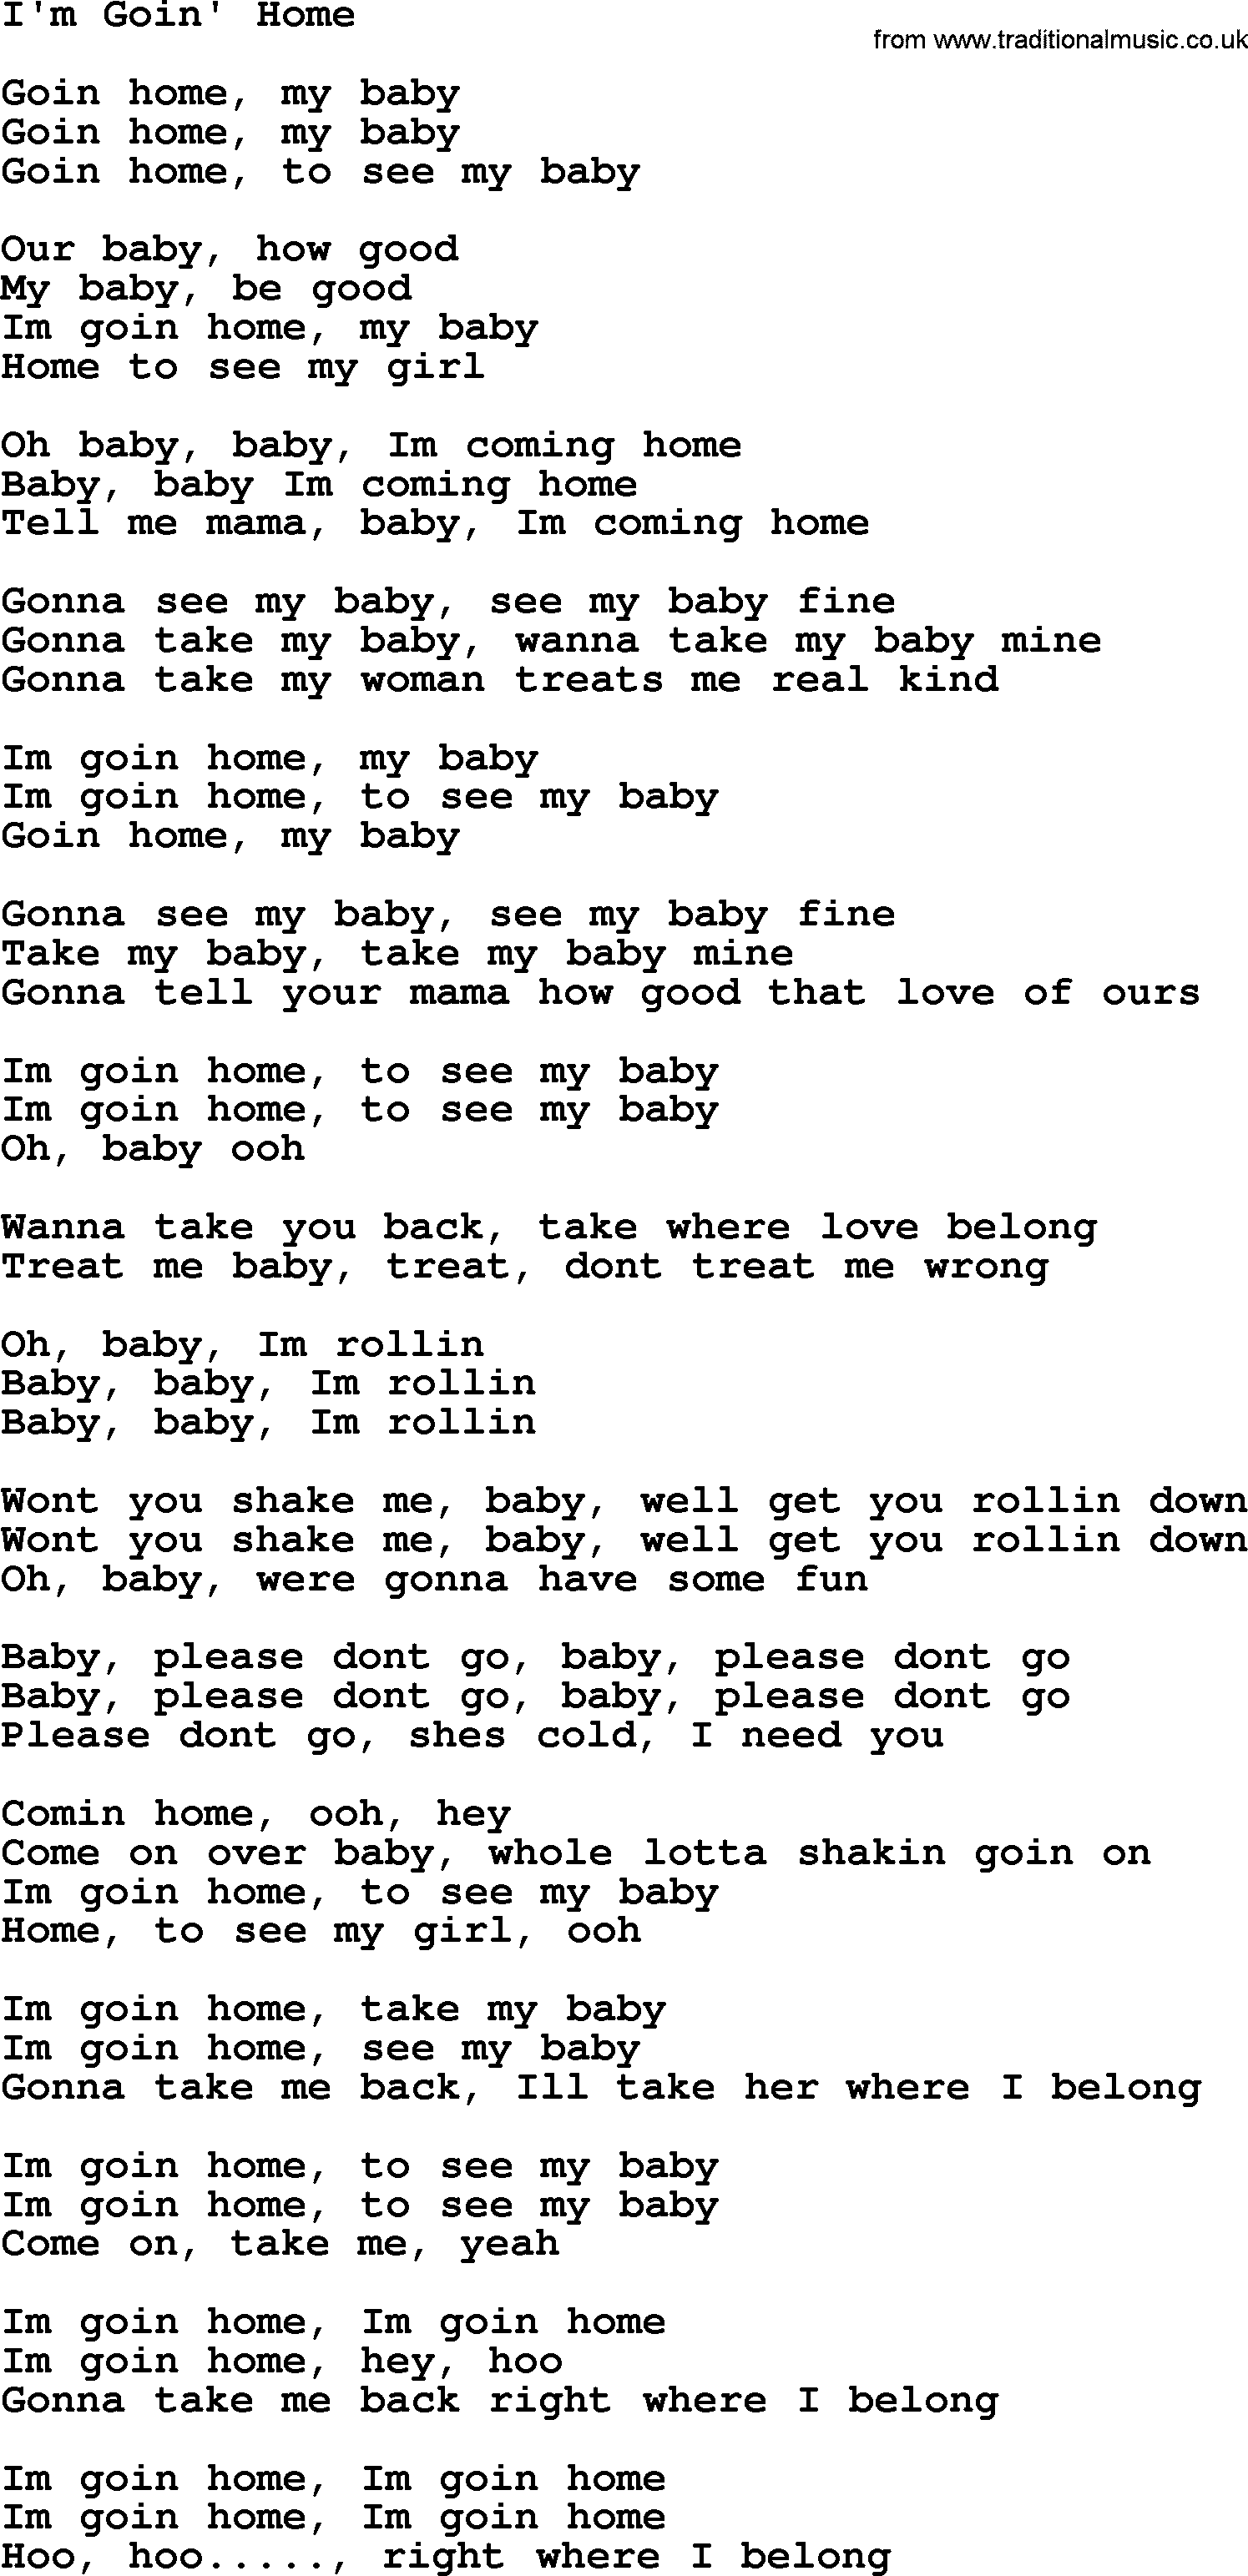 The Byrds song I'm Goin' Home, lyrics